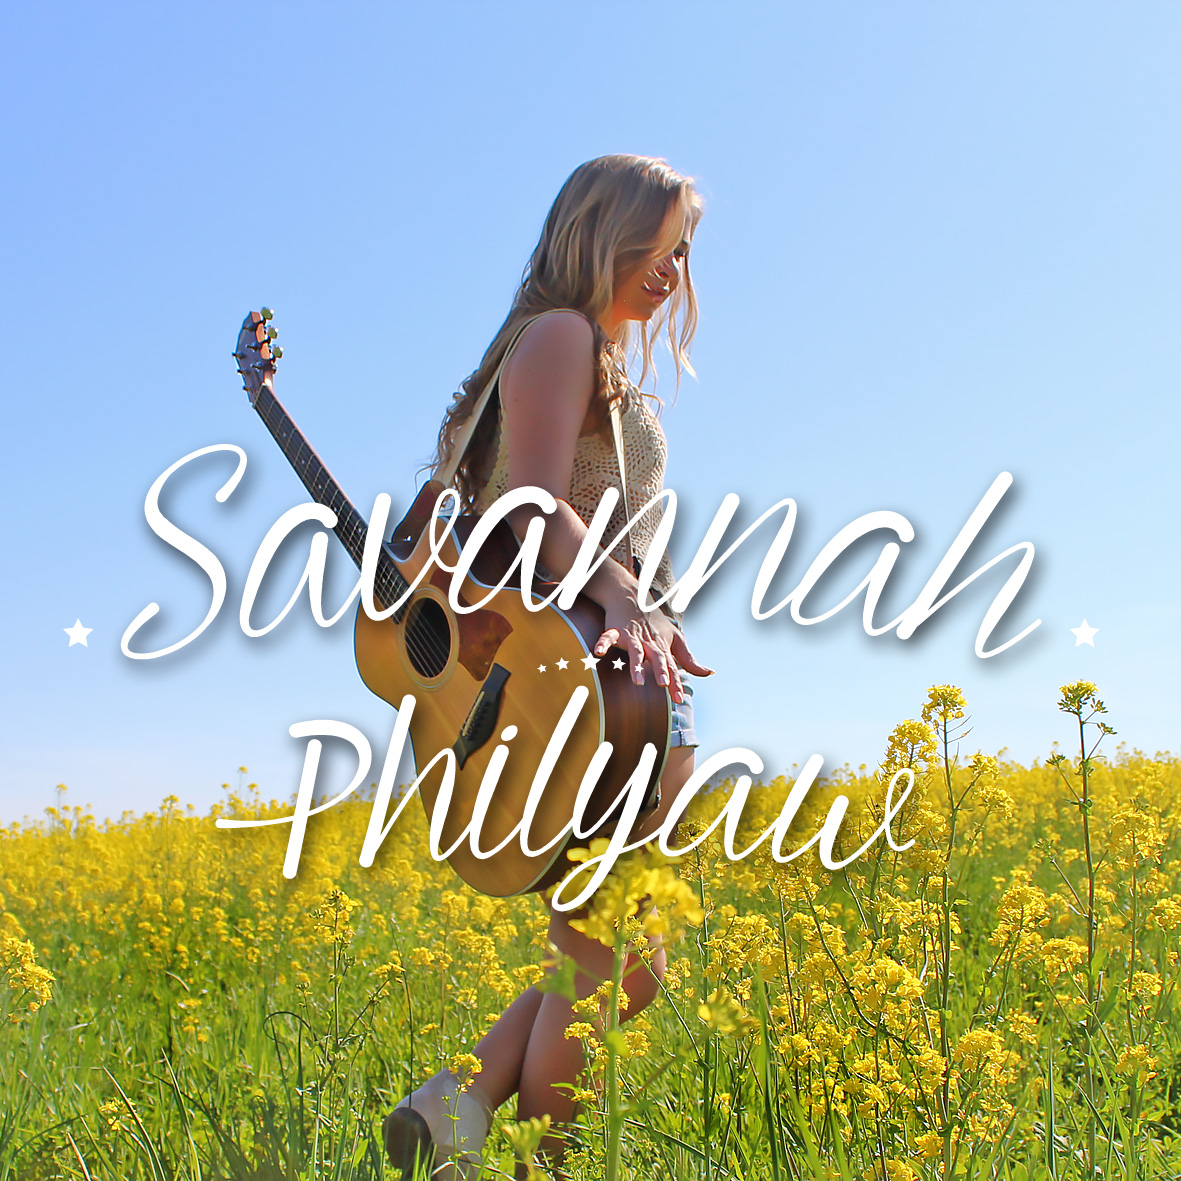  Savannah Philyaw – “Hurting You”